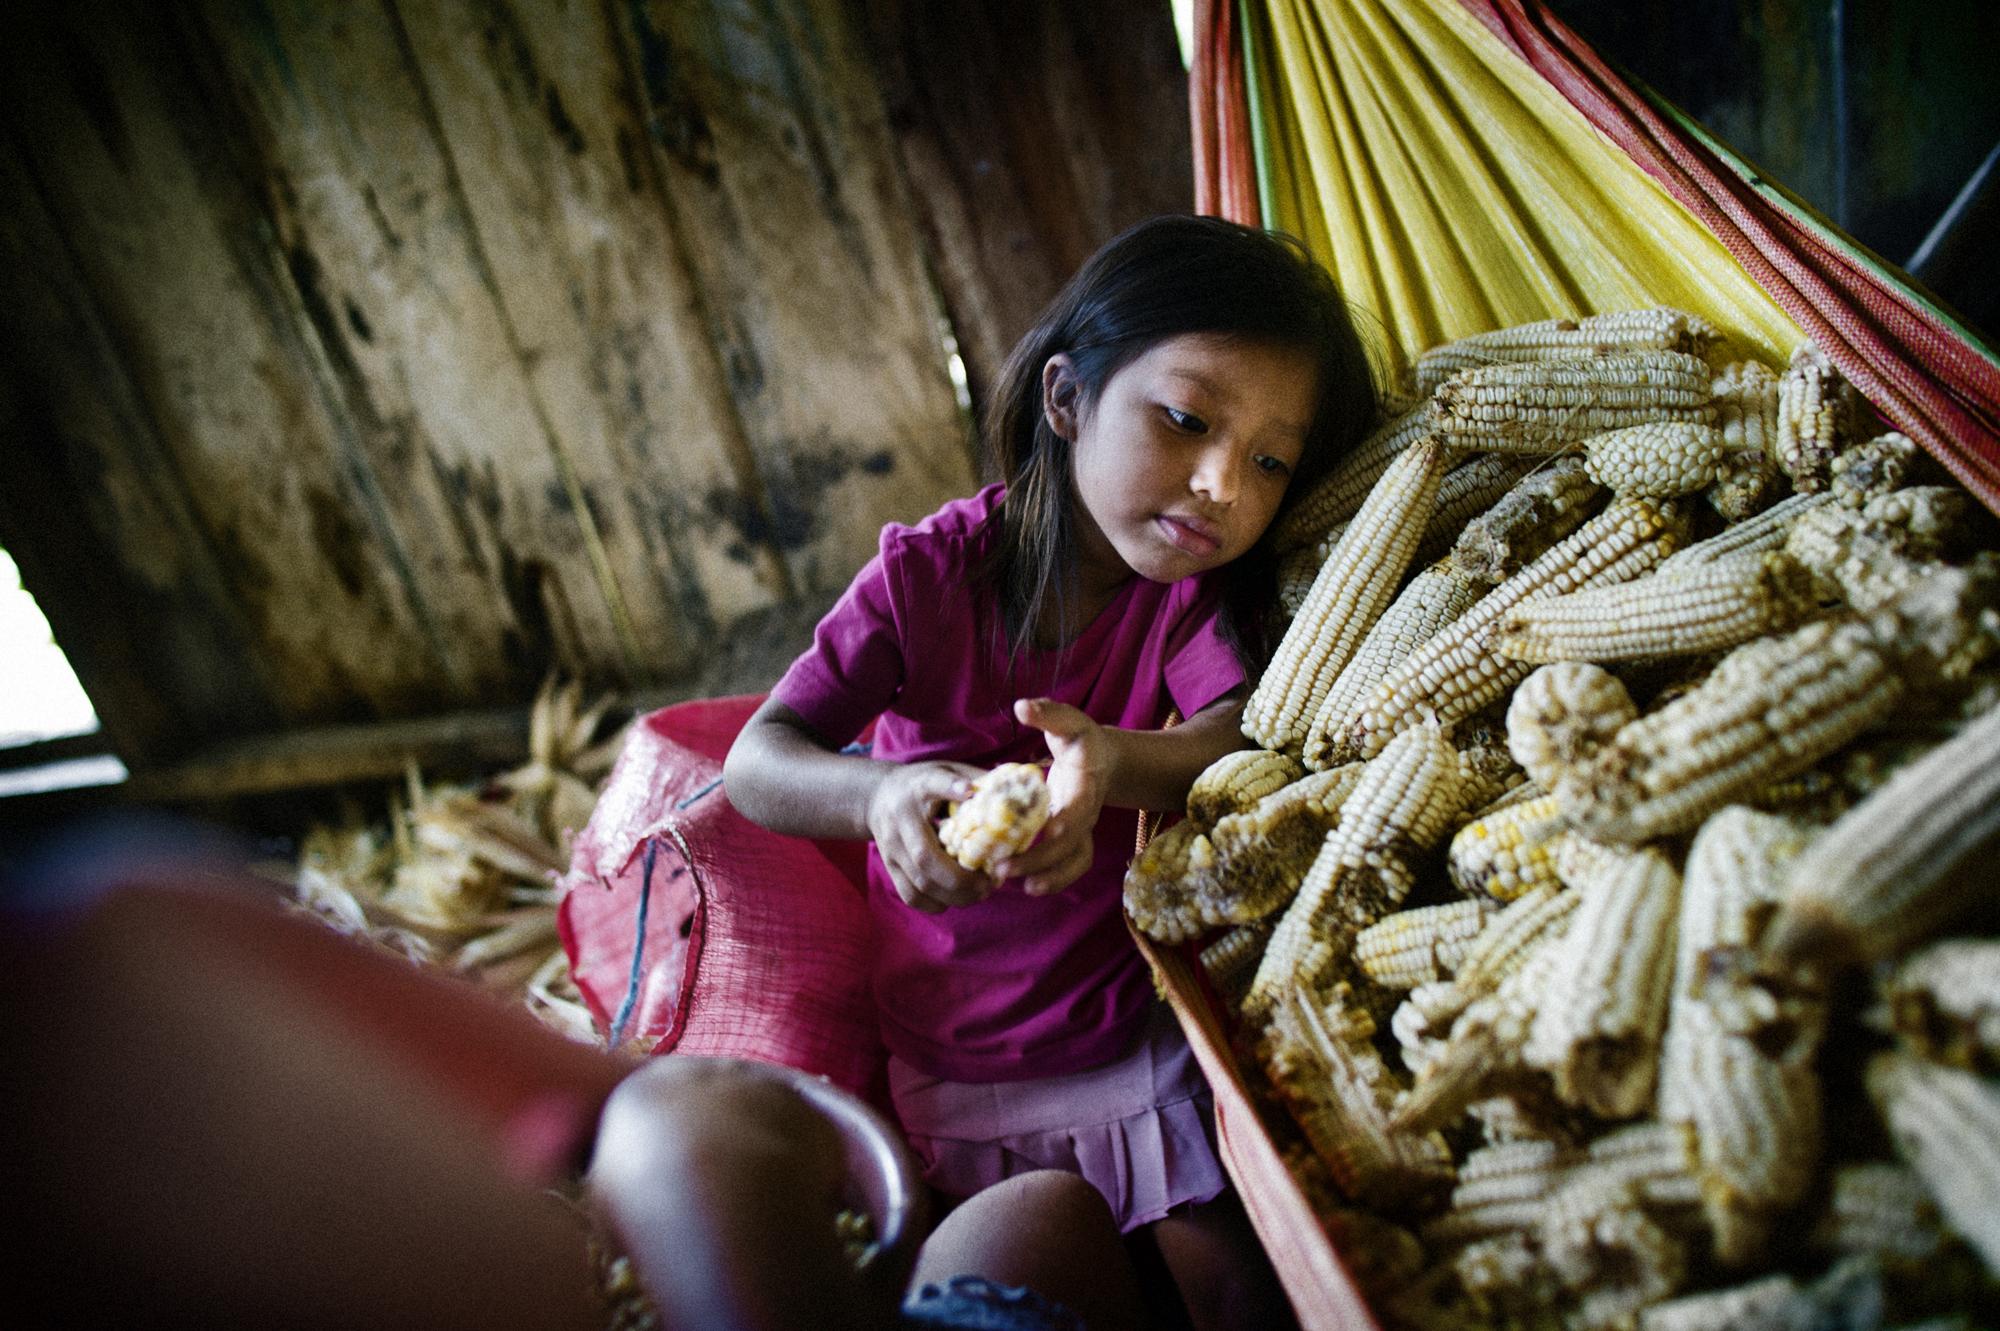 Microcredit / Central America - Jinotega, Nicaragua.
October 2010.
The daughter of...